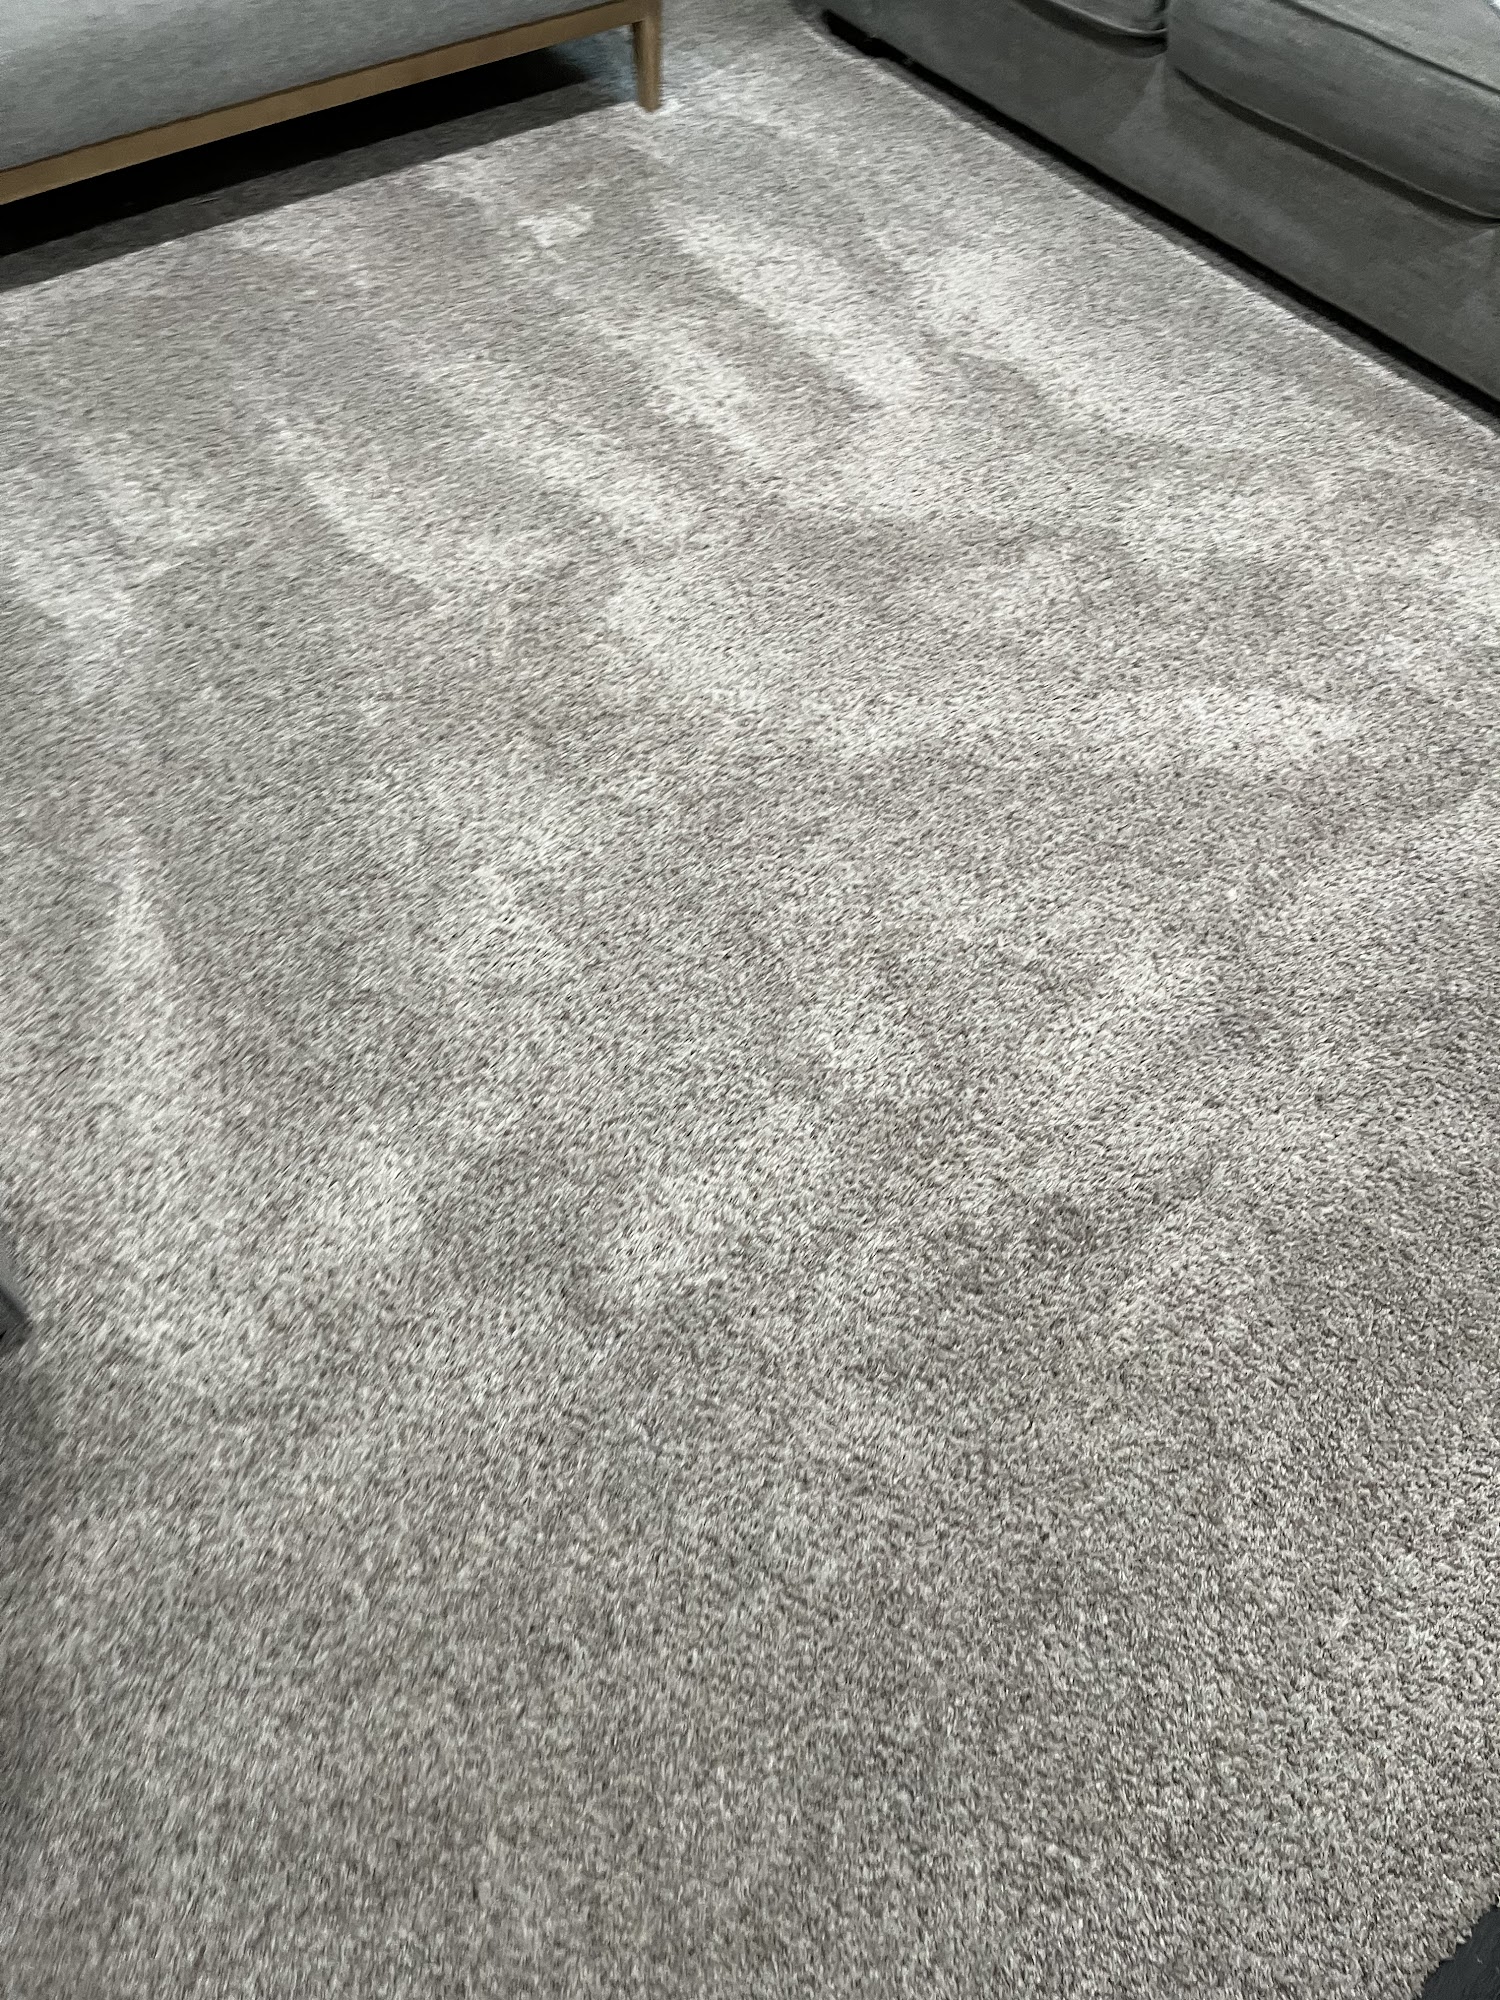 Carpet Line - Professional Carpet & Rug Services